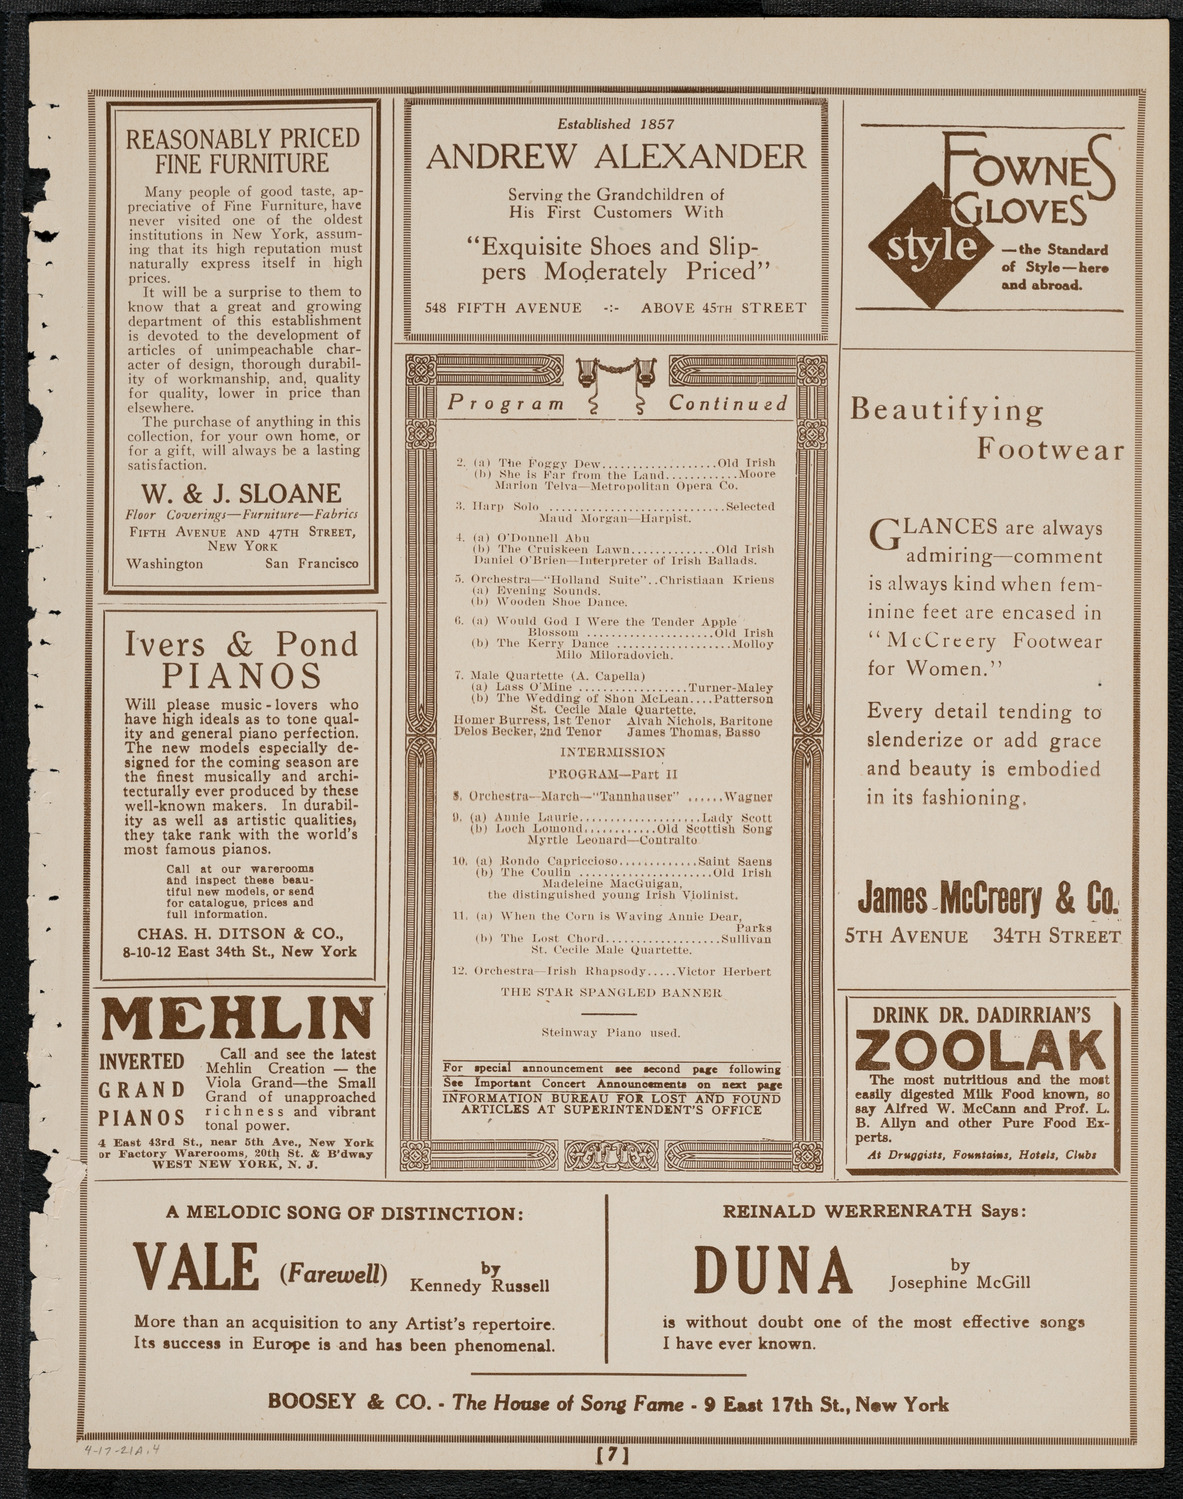 The Irish Musical Society, April 17, 1921, program page 7